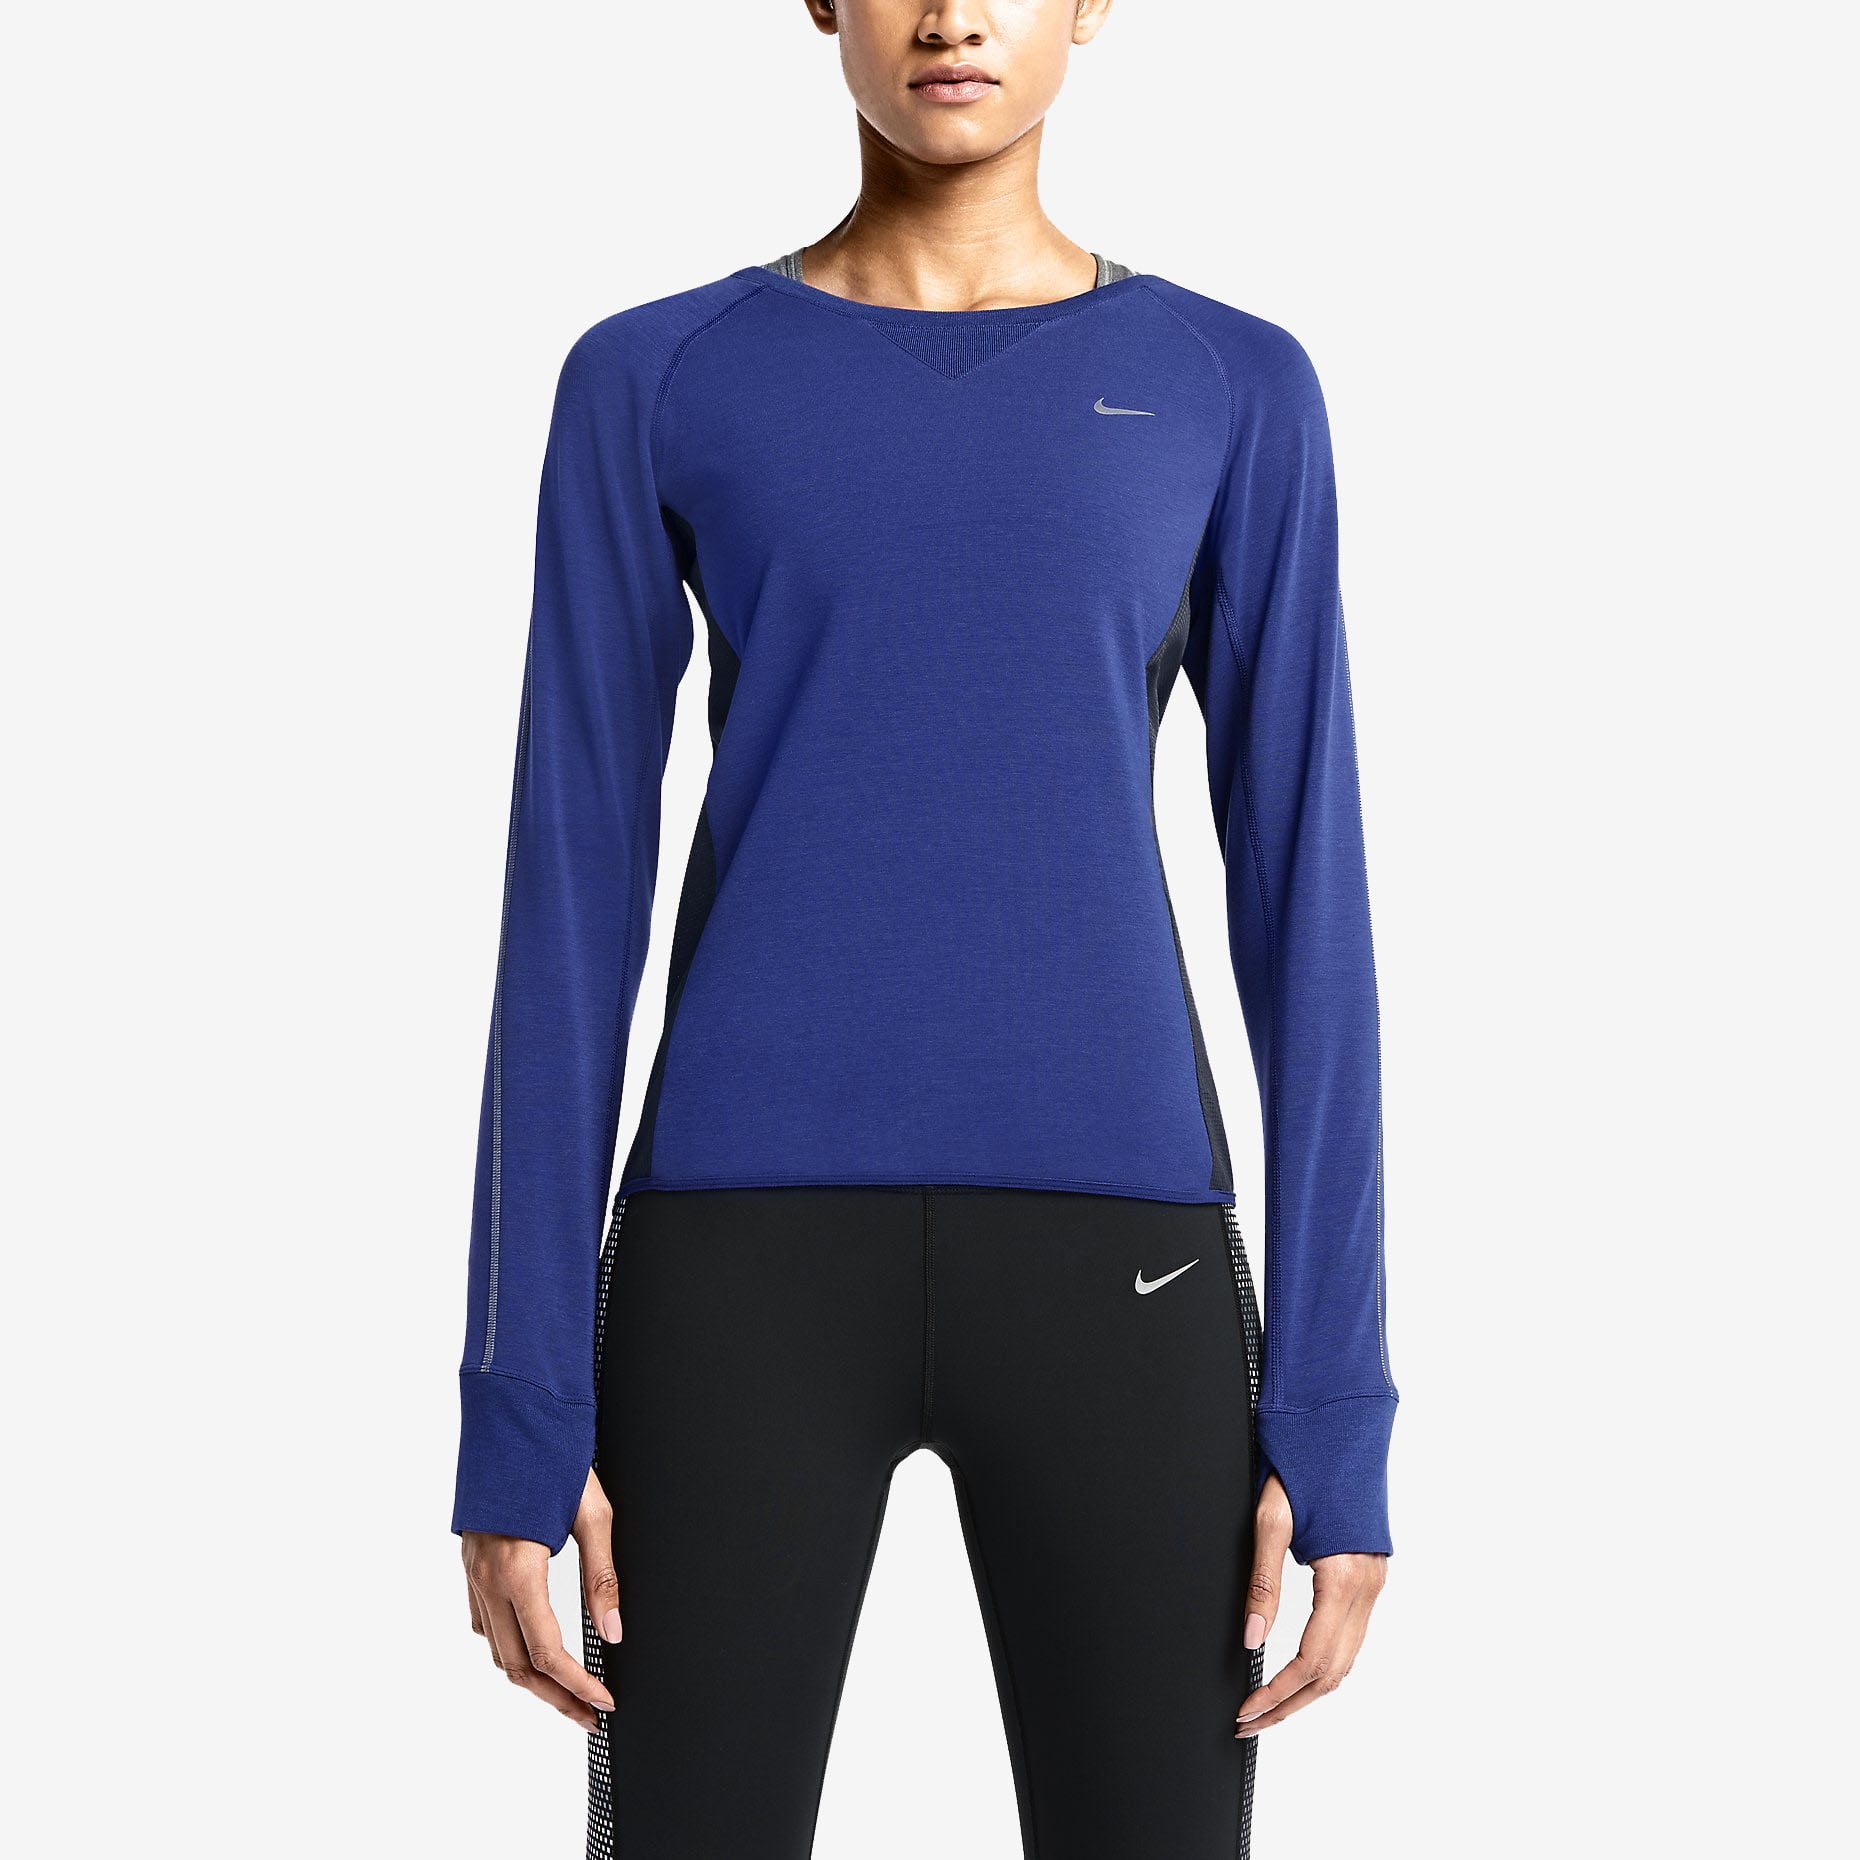 Nike - Nike Women's Dri-Fit Sprint Crew Running Shirt - Walmart.com ...